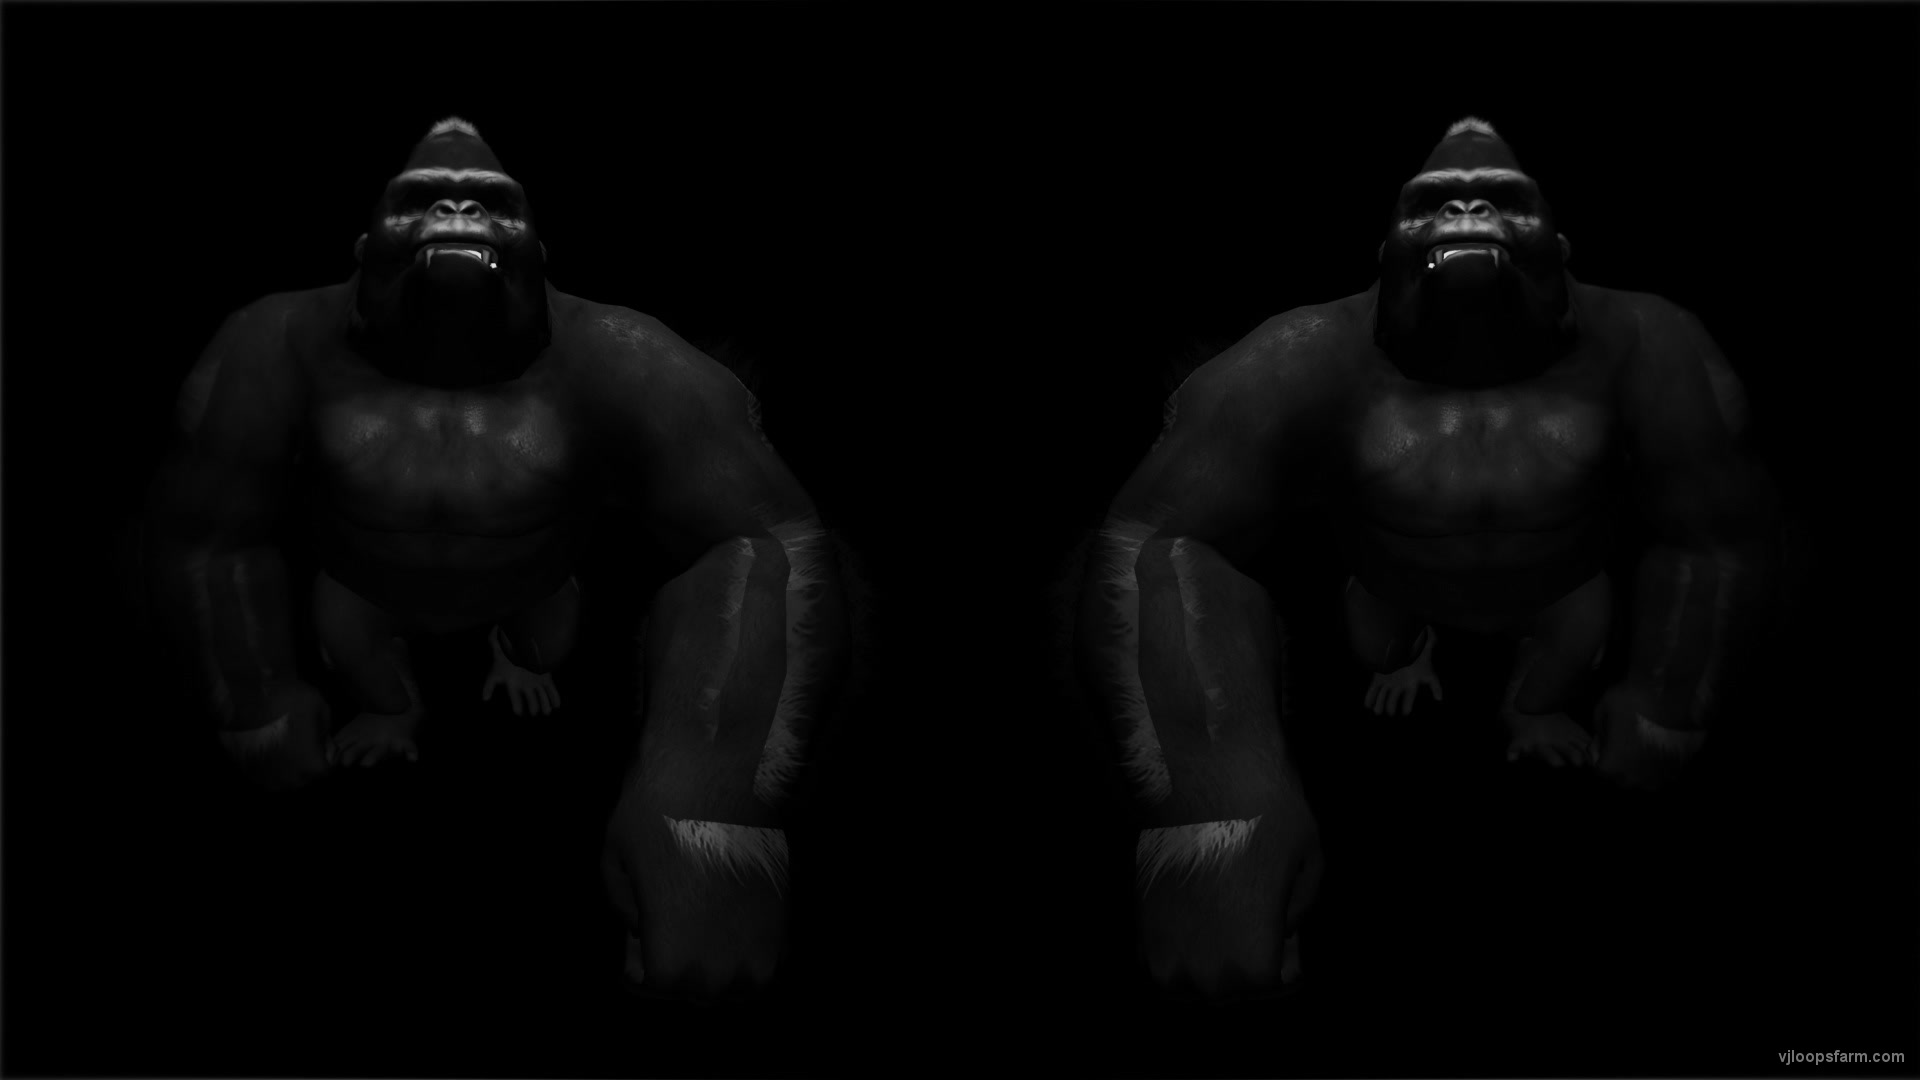 Gorilla Bodyguards Full HD VJ Loop